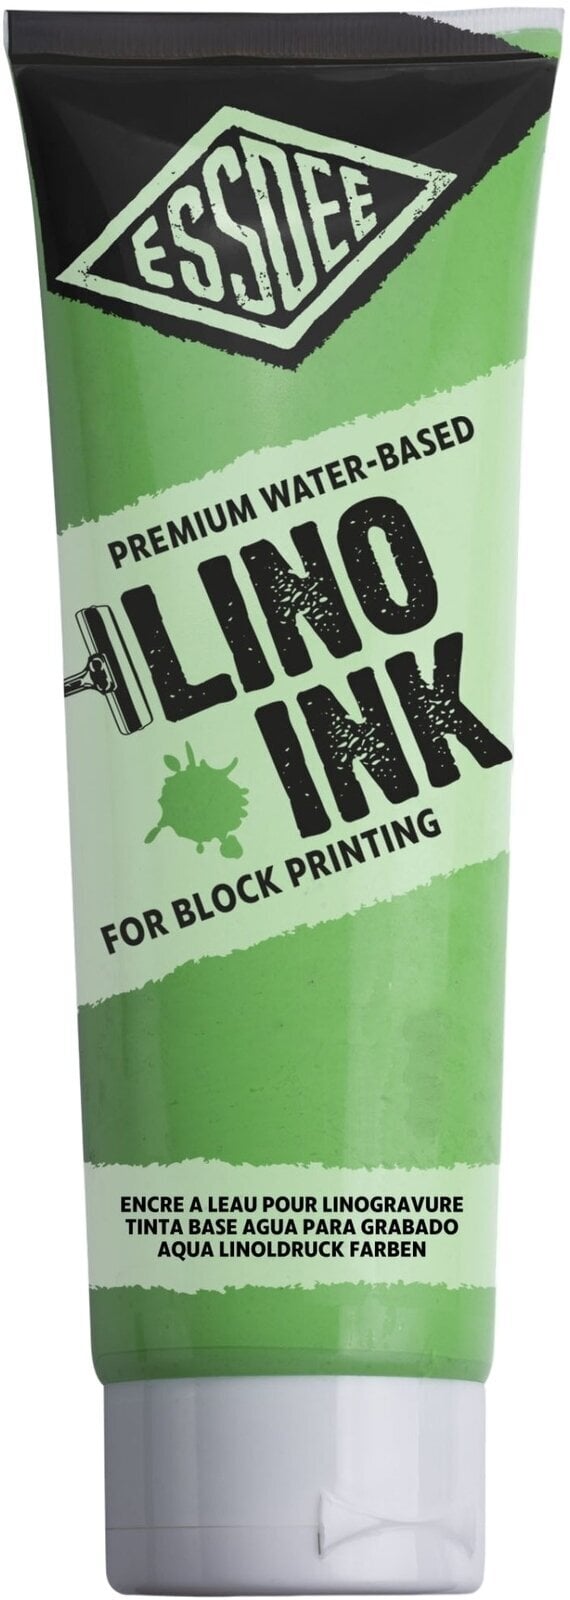 Peintures pour la linogravure Essdee Block Printing Ink Peintures pour la linogravure Fluorescent Green 300 ml